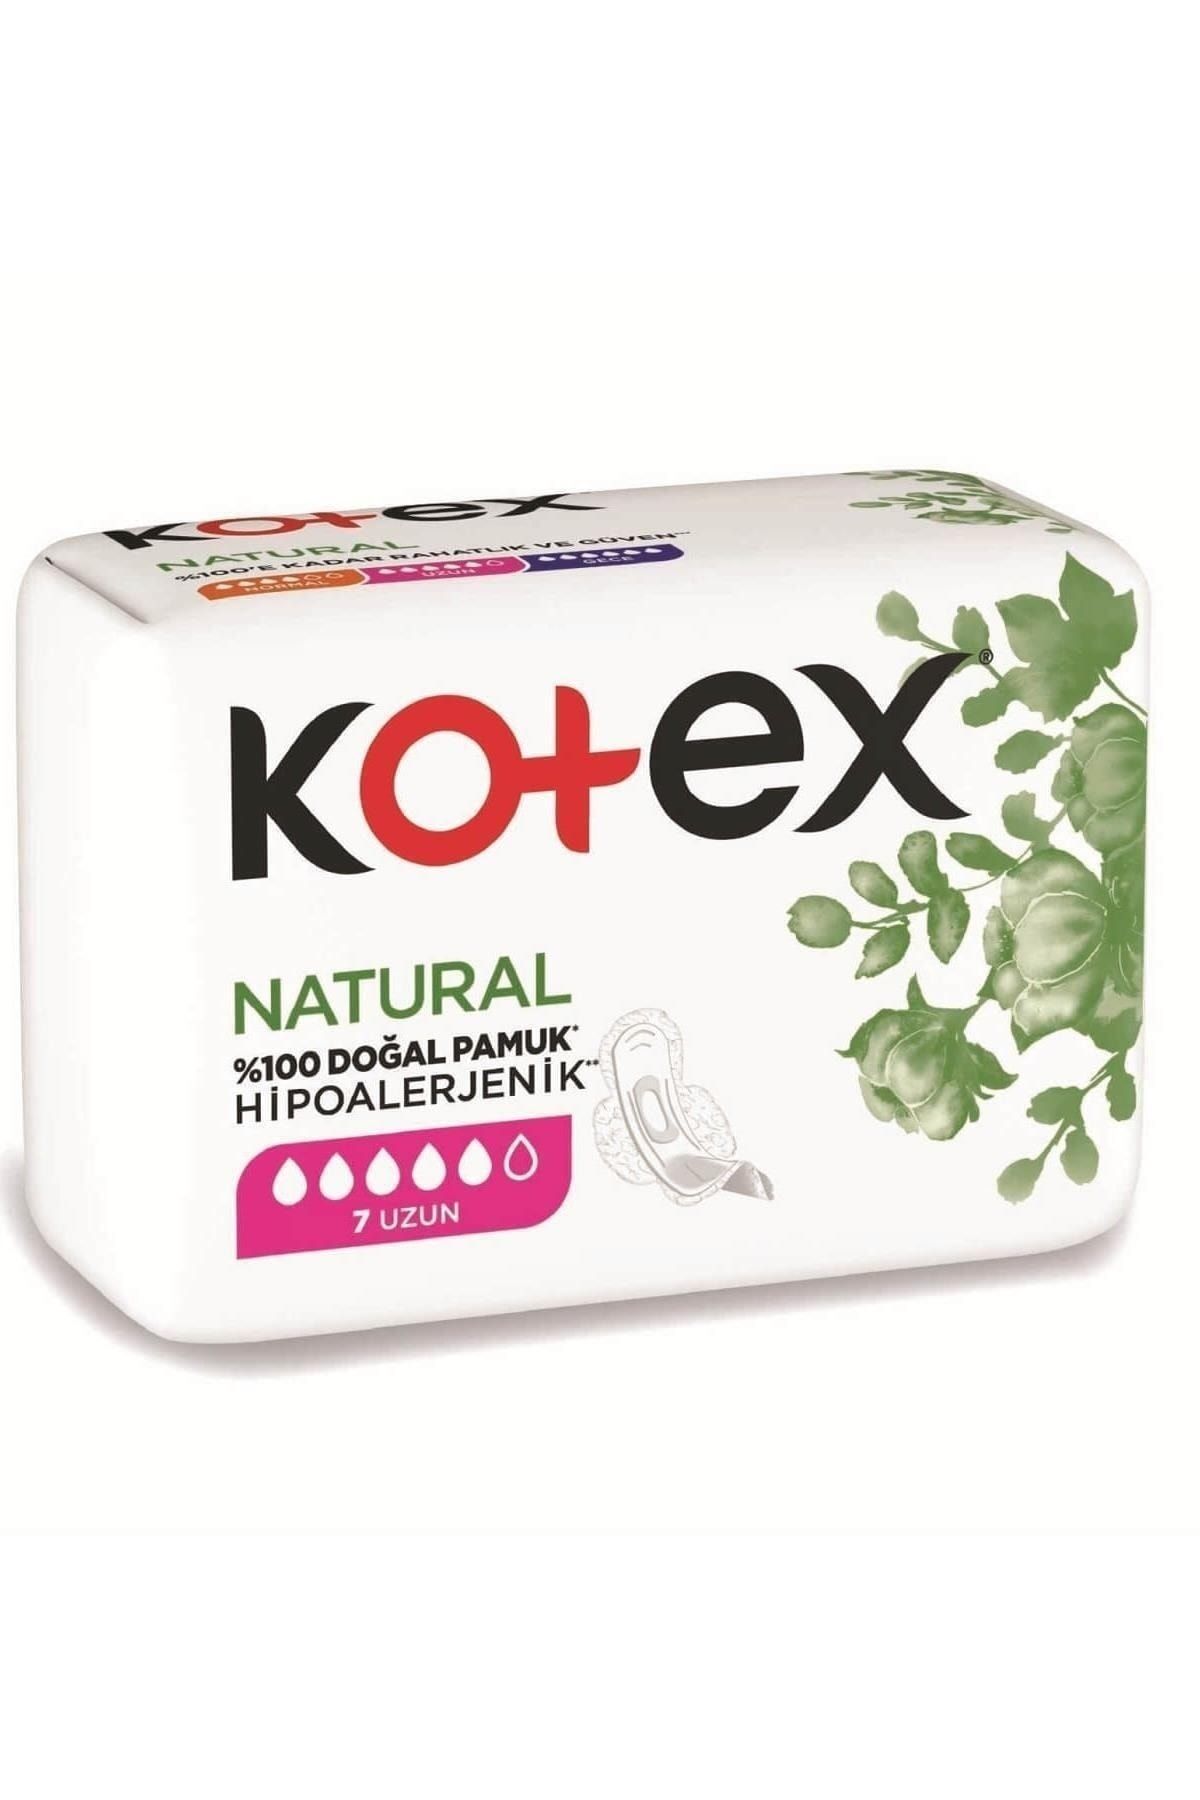 Kotex Natural Uzun 7'li 24 Adet